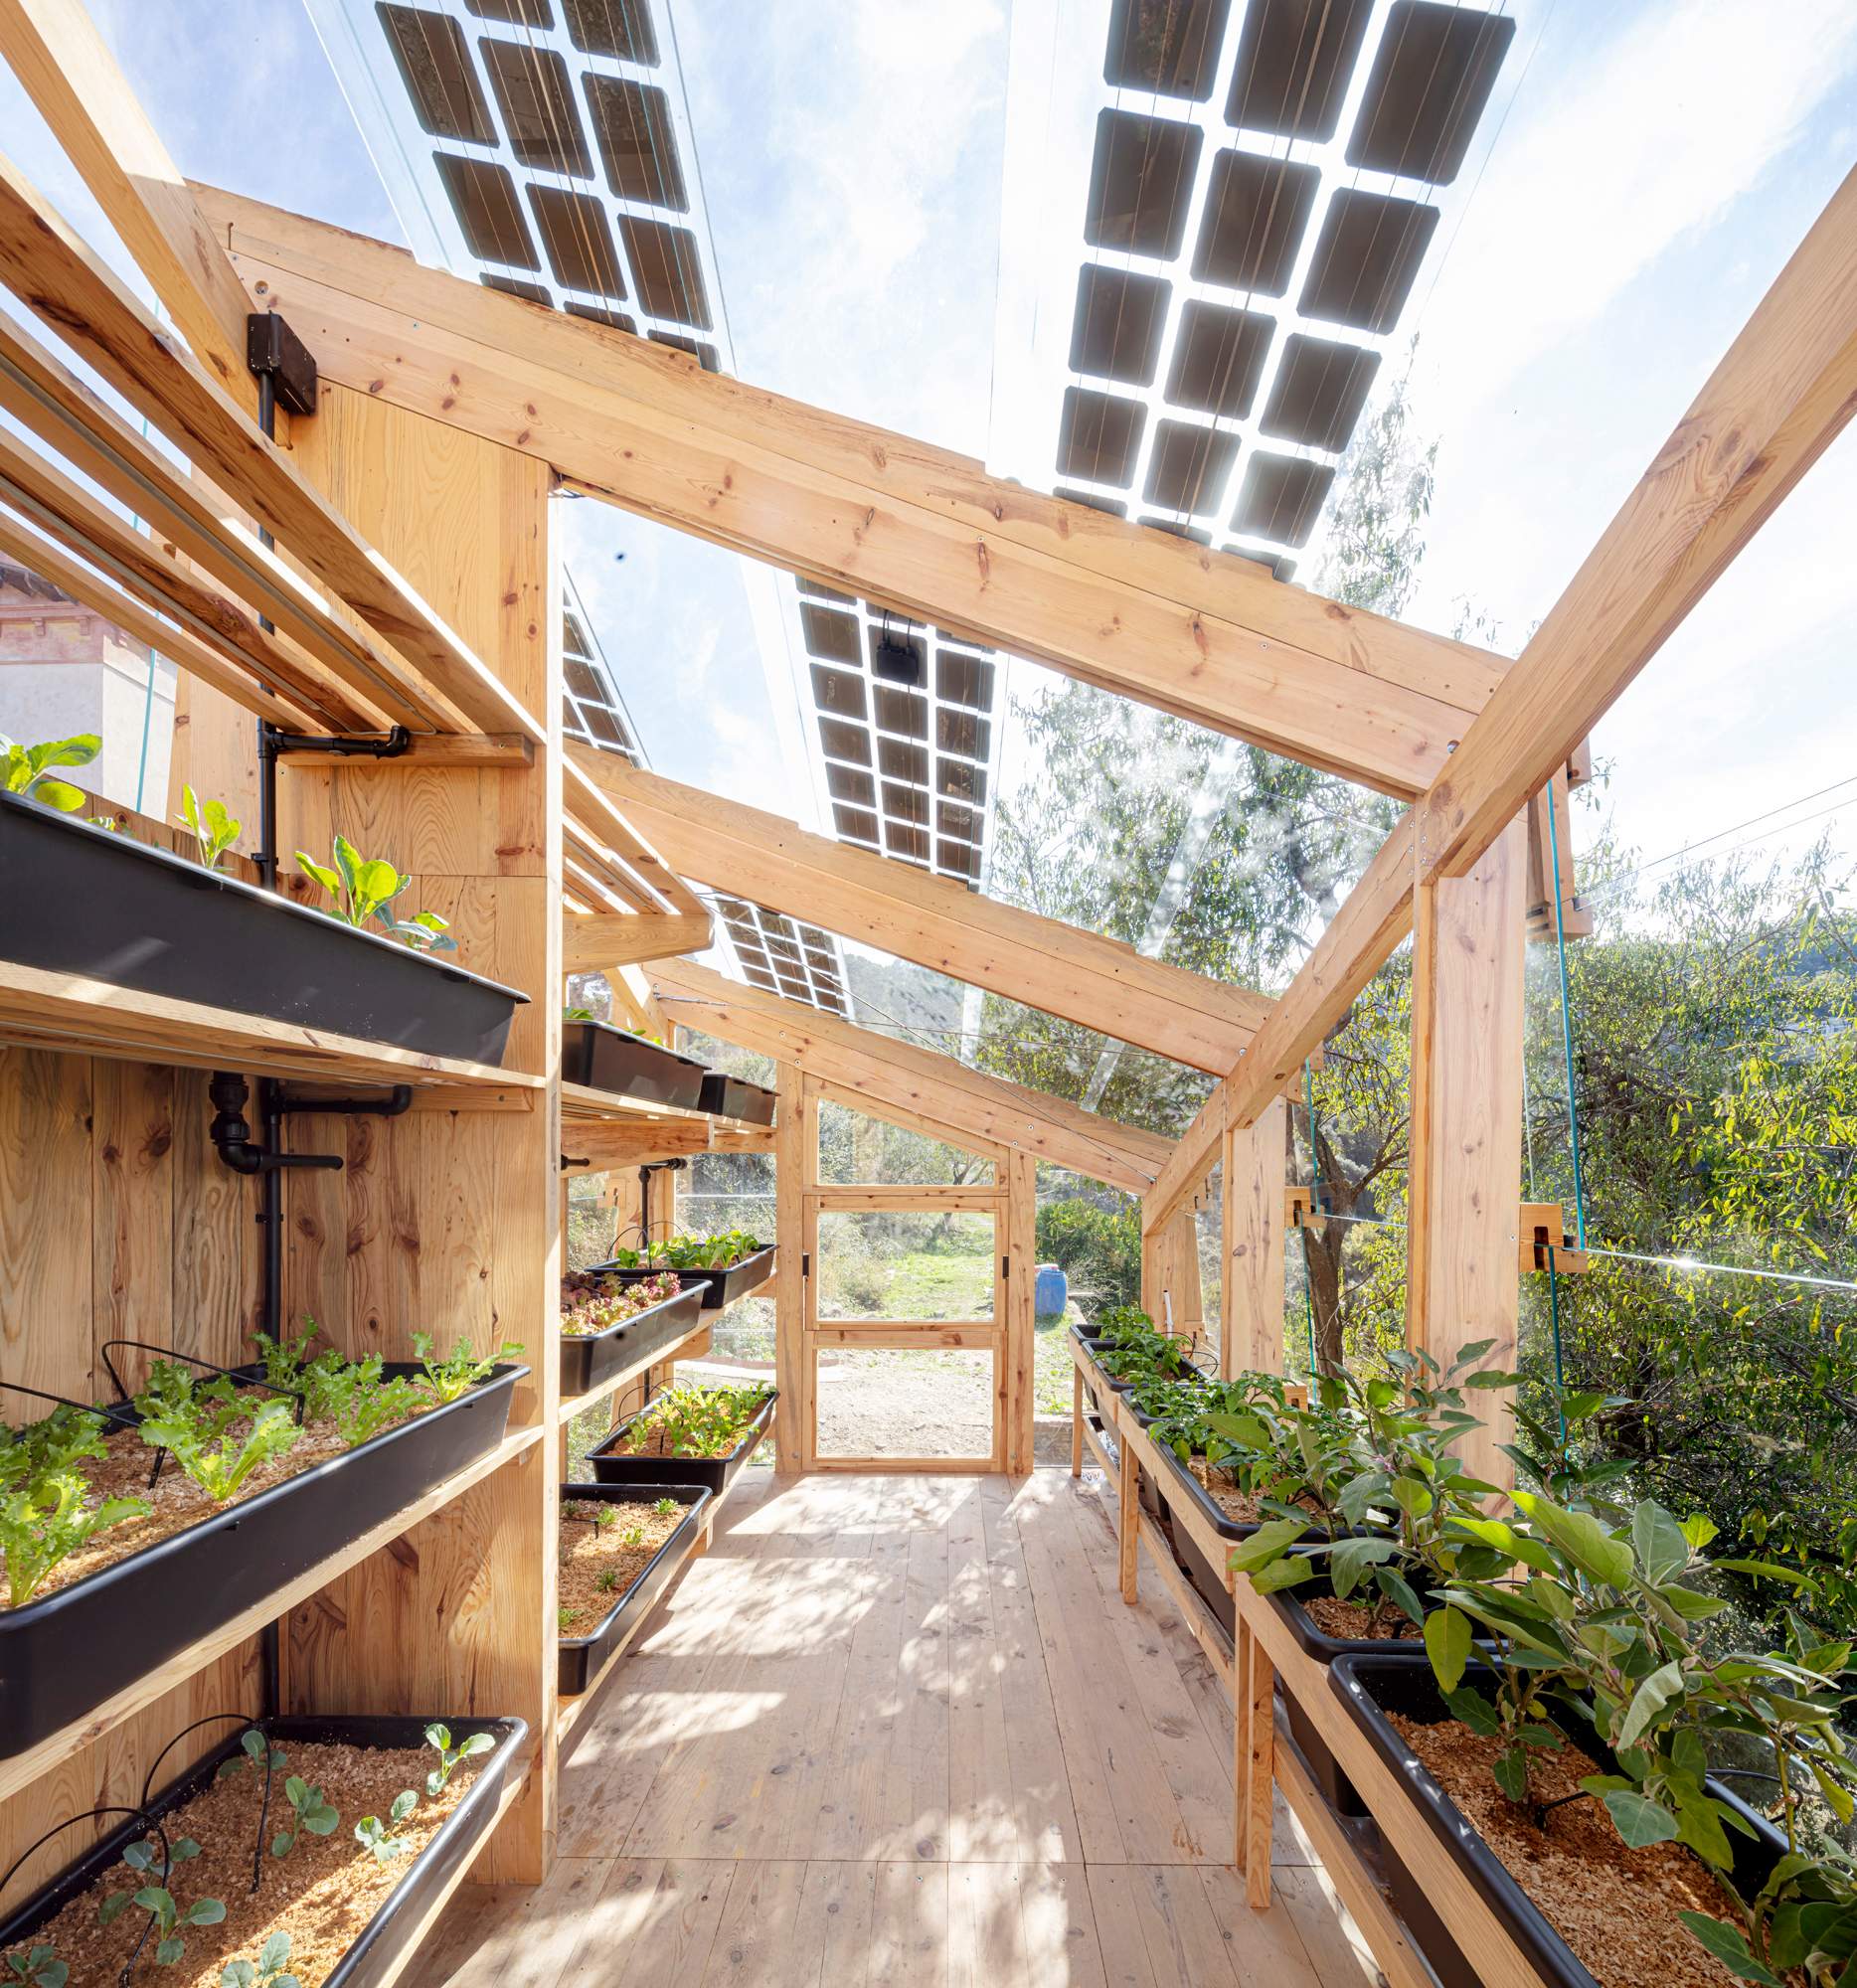 7-solar-greenhouse-cadria-goula_cortesia_iaac-pati-nunez-agency.jpg